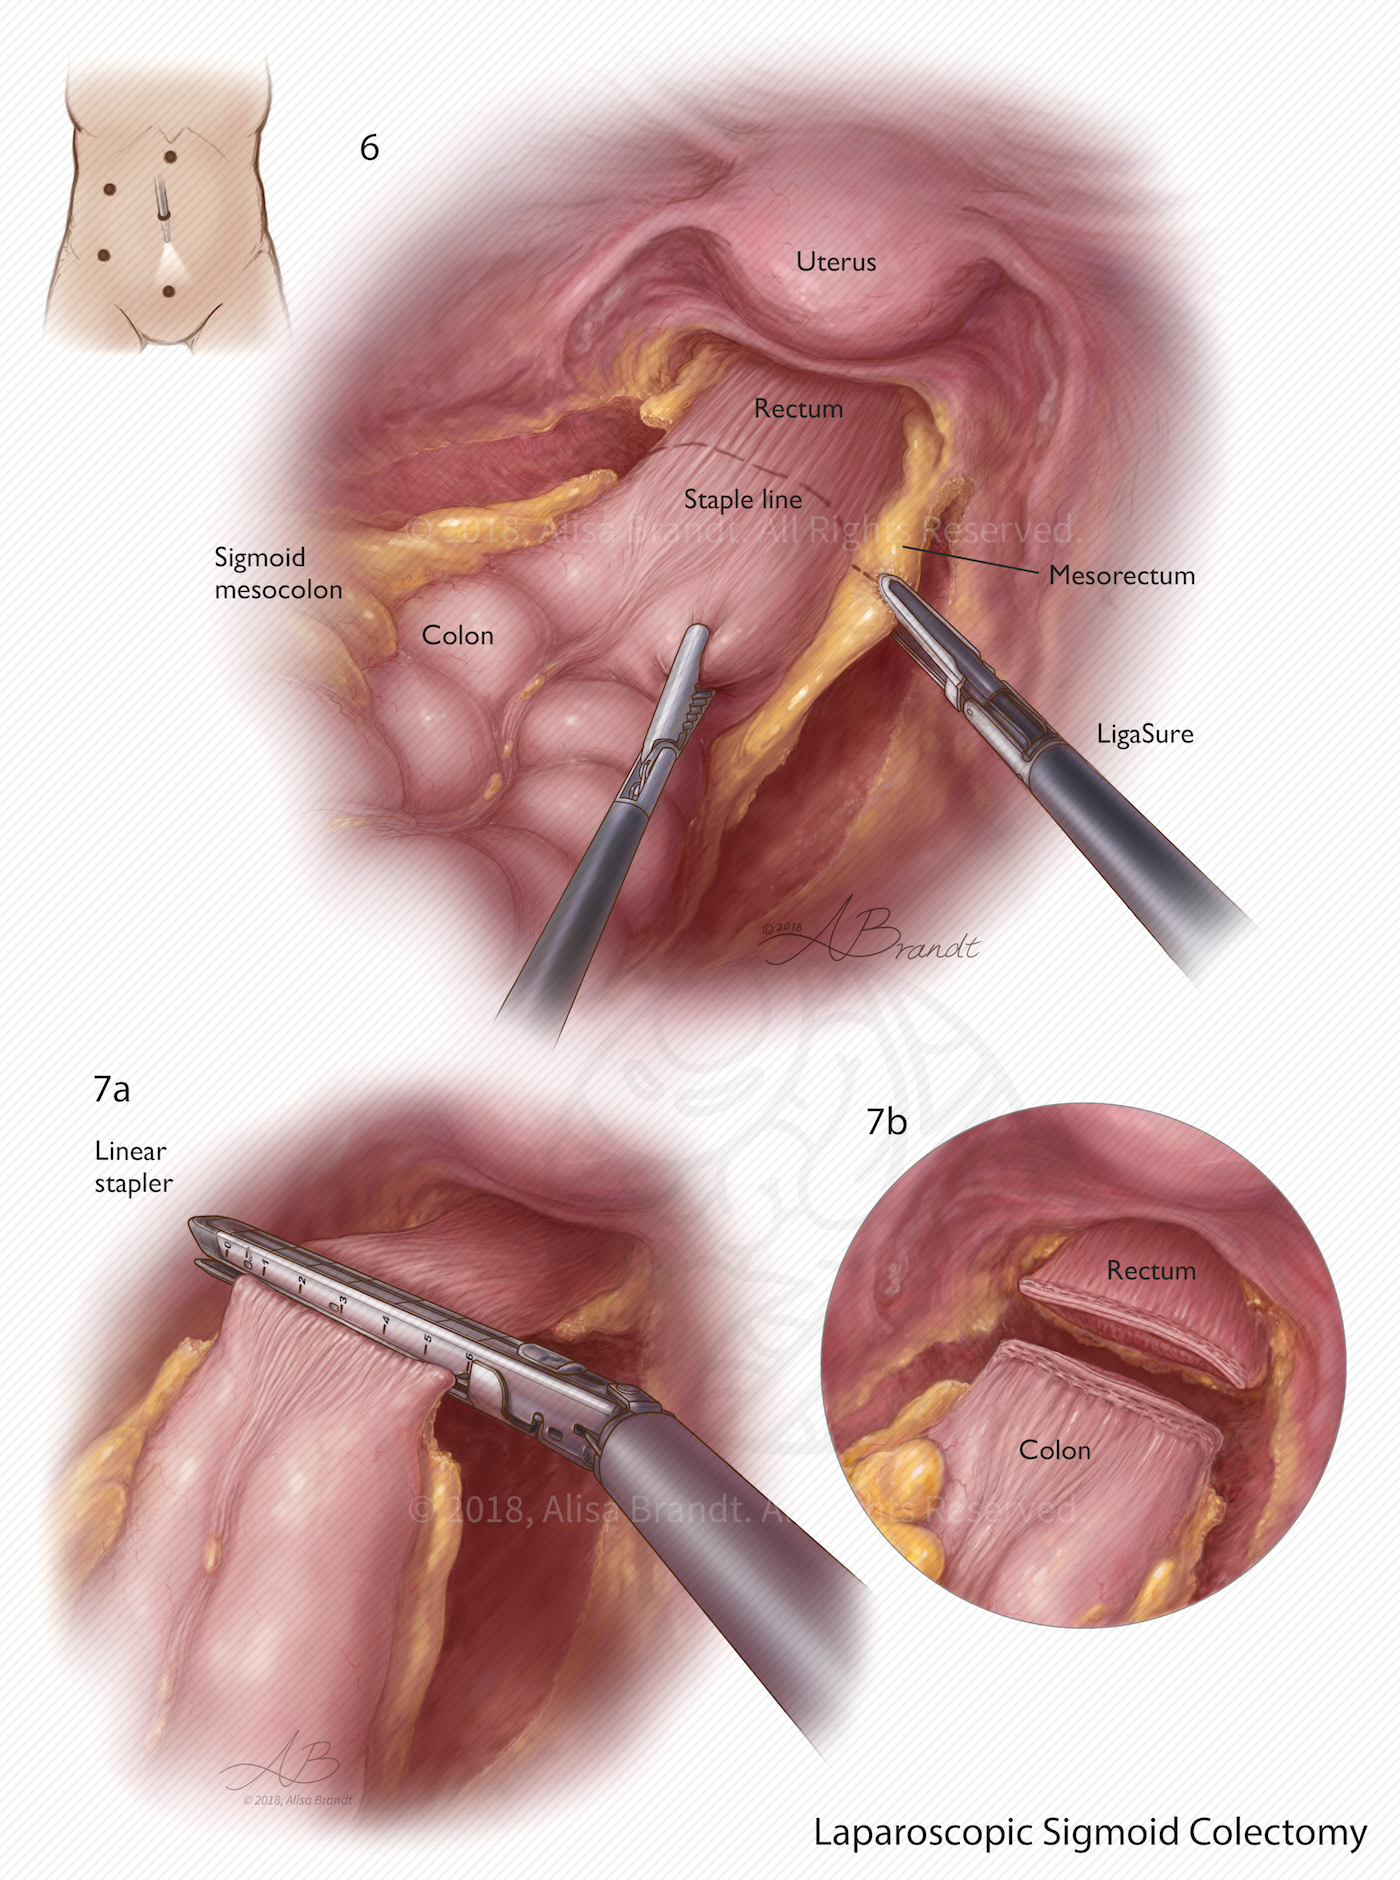 Laparoscopic sigmoid colectomy surgical illustration